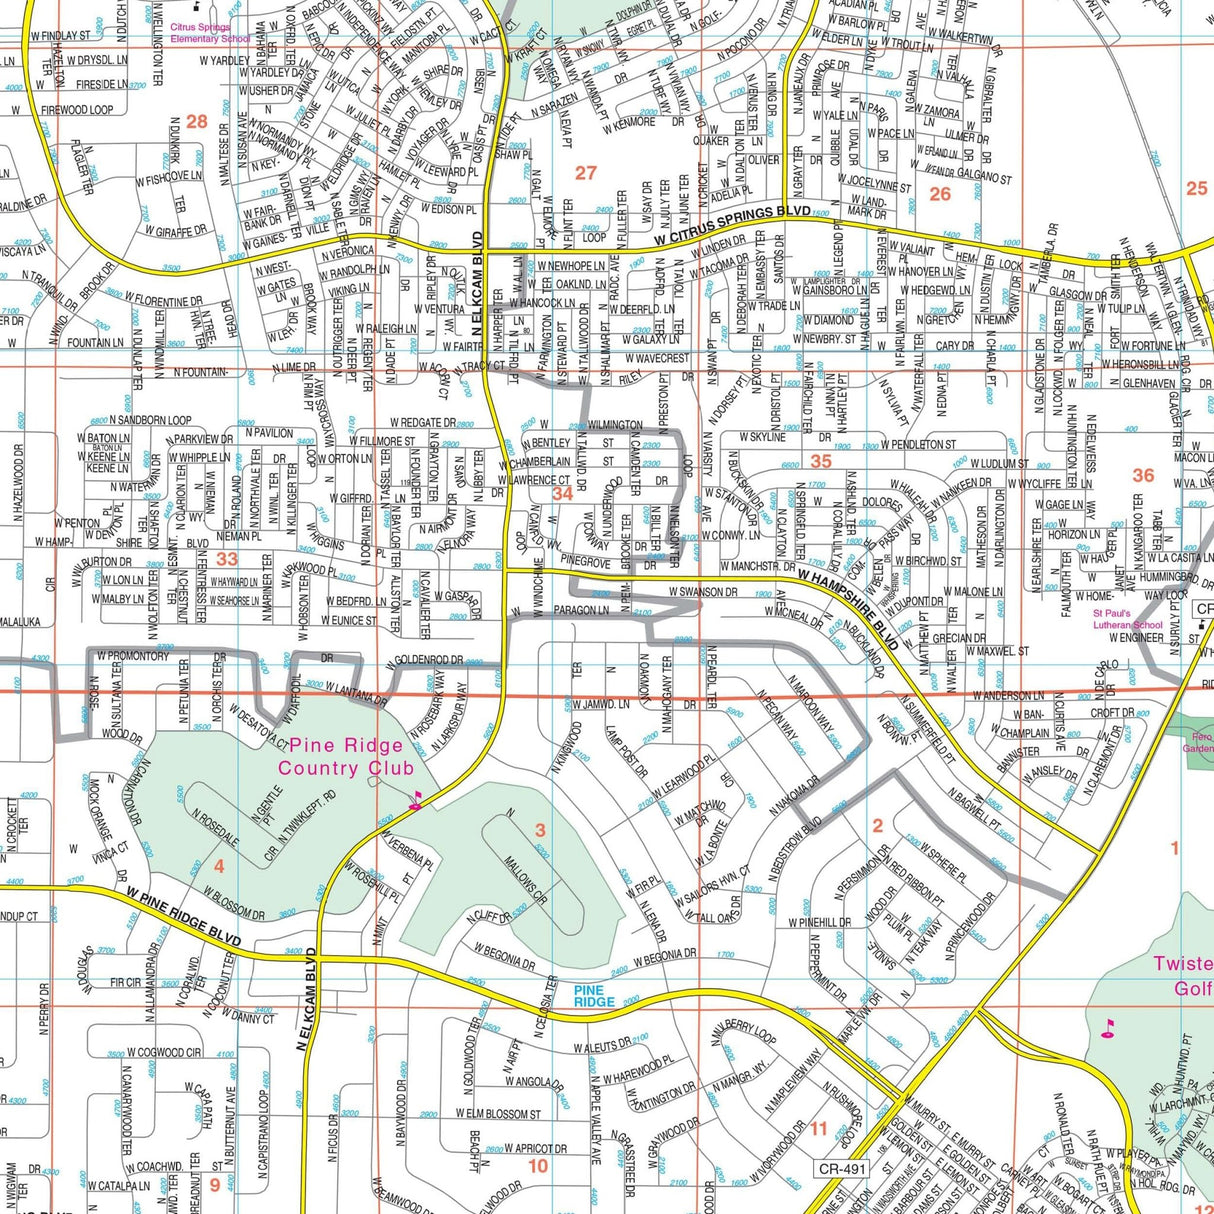 Citrus County, FL Wall Map - KA-C-FL-CITRUS-PAPER - Ultimate Globes